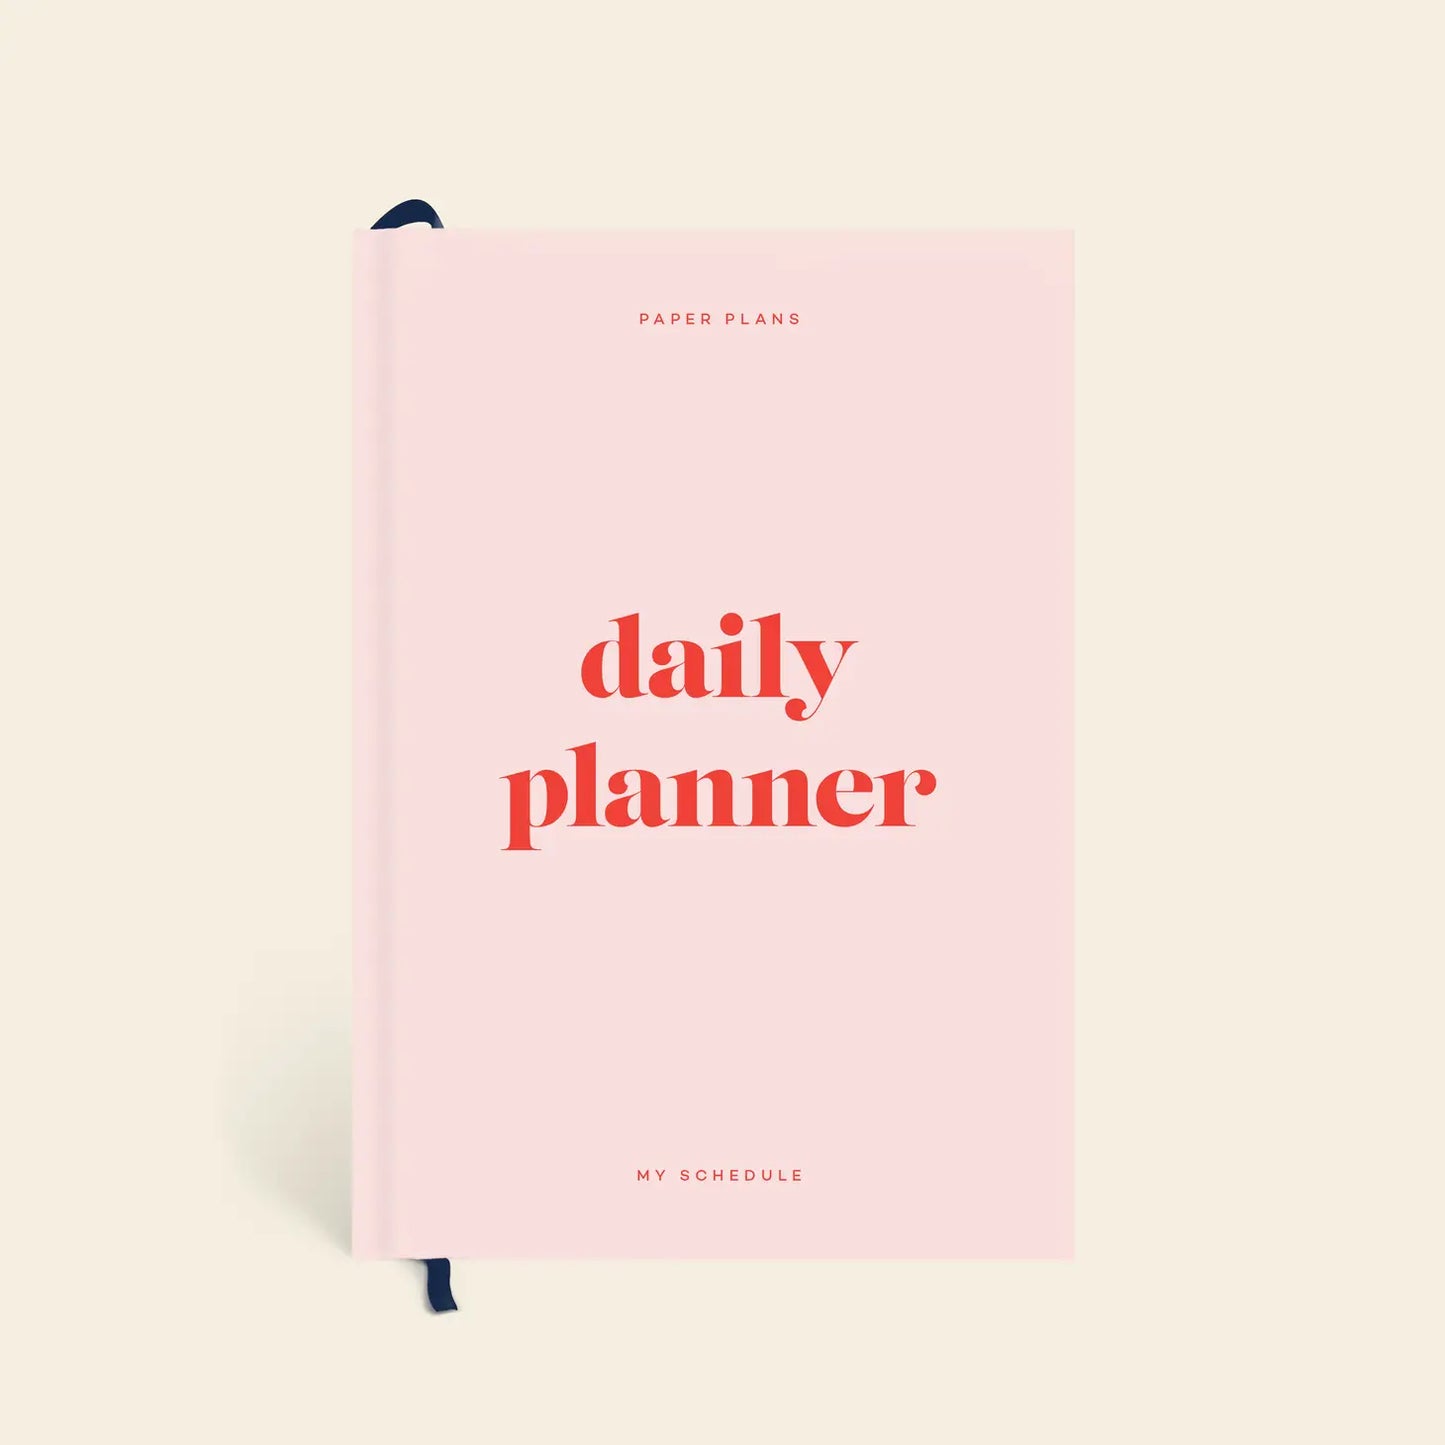 Joy Daily Planner